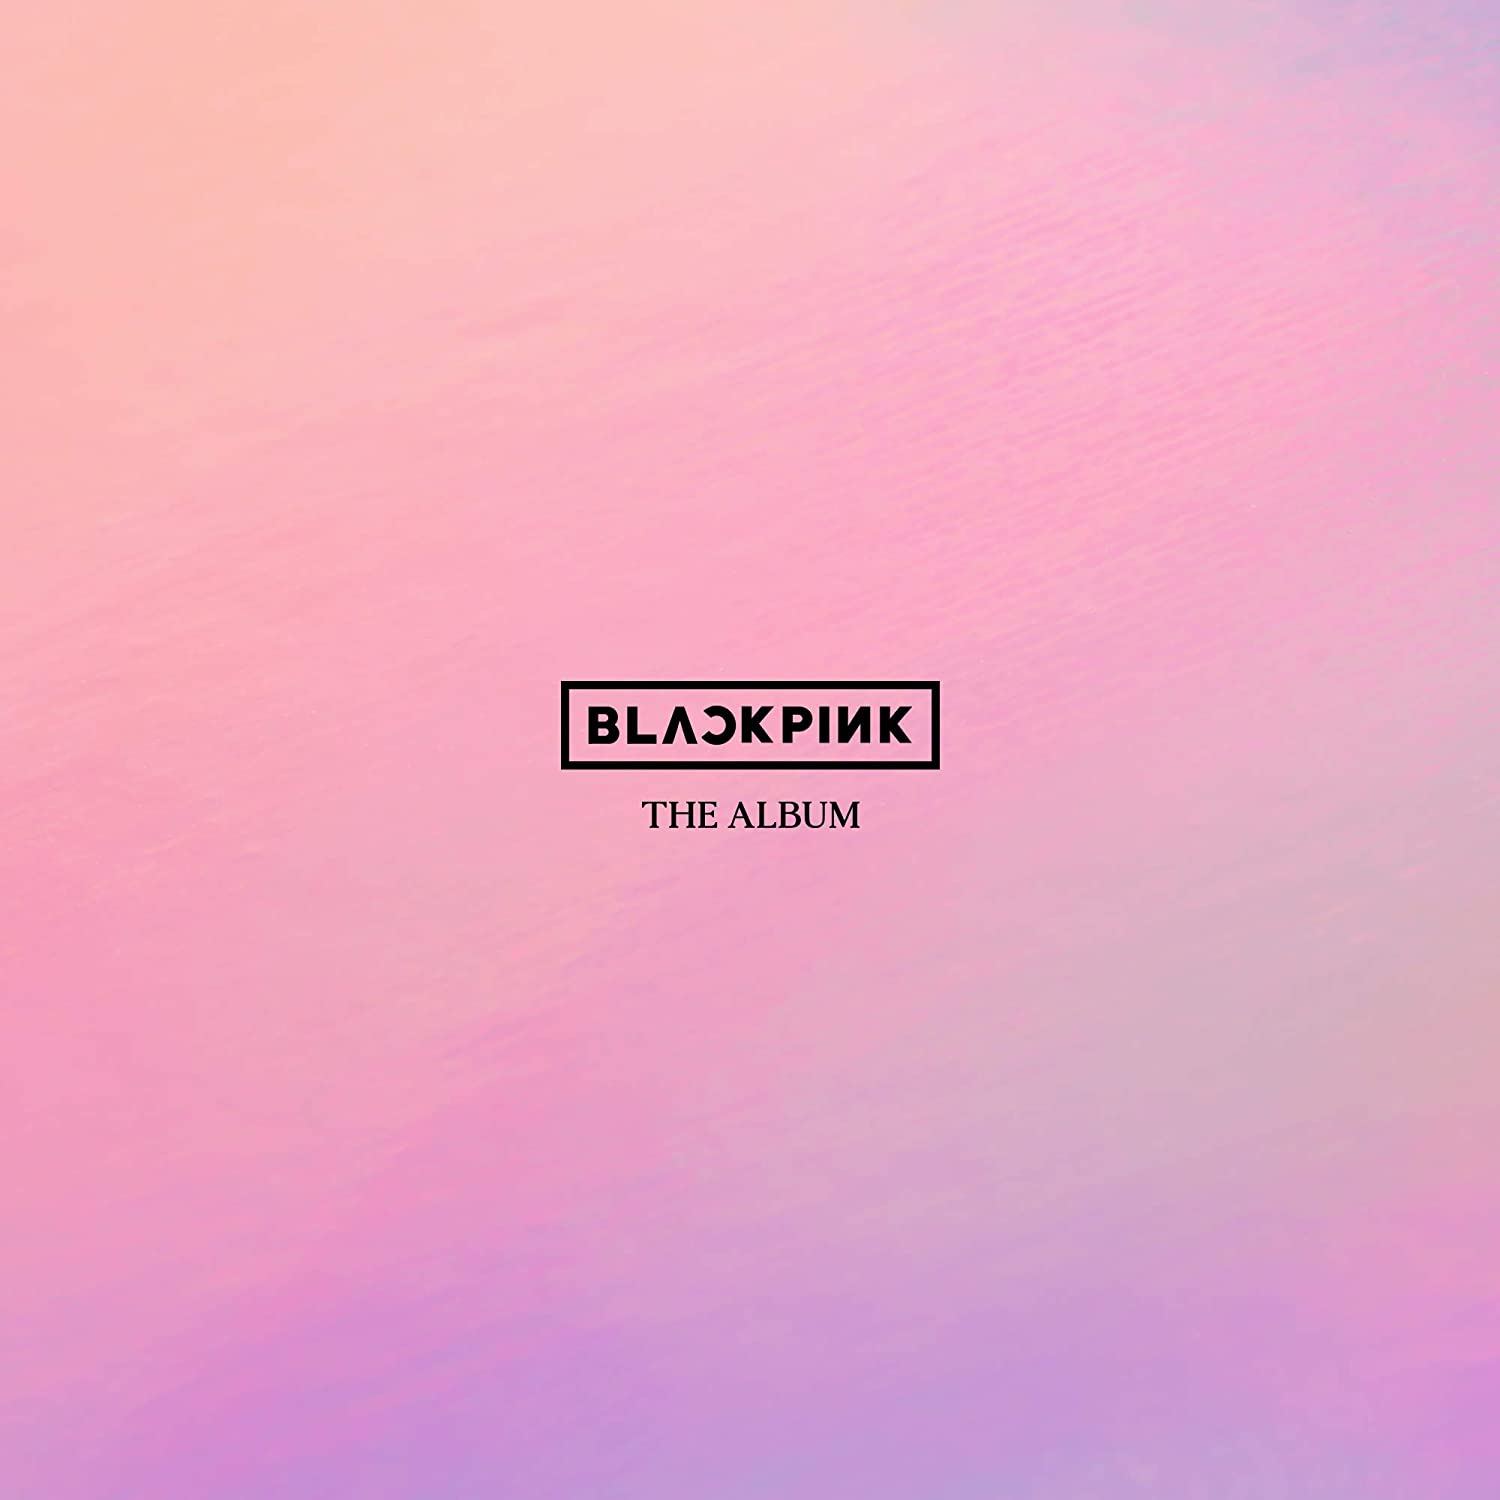 Blackpink - The Album (Version 4) (Blackpink)